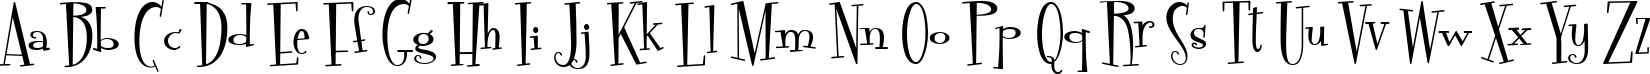 Пример написания английского алфавита шрифтом Pudelina